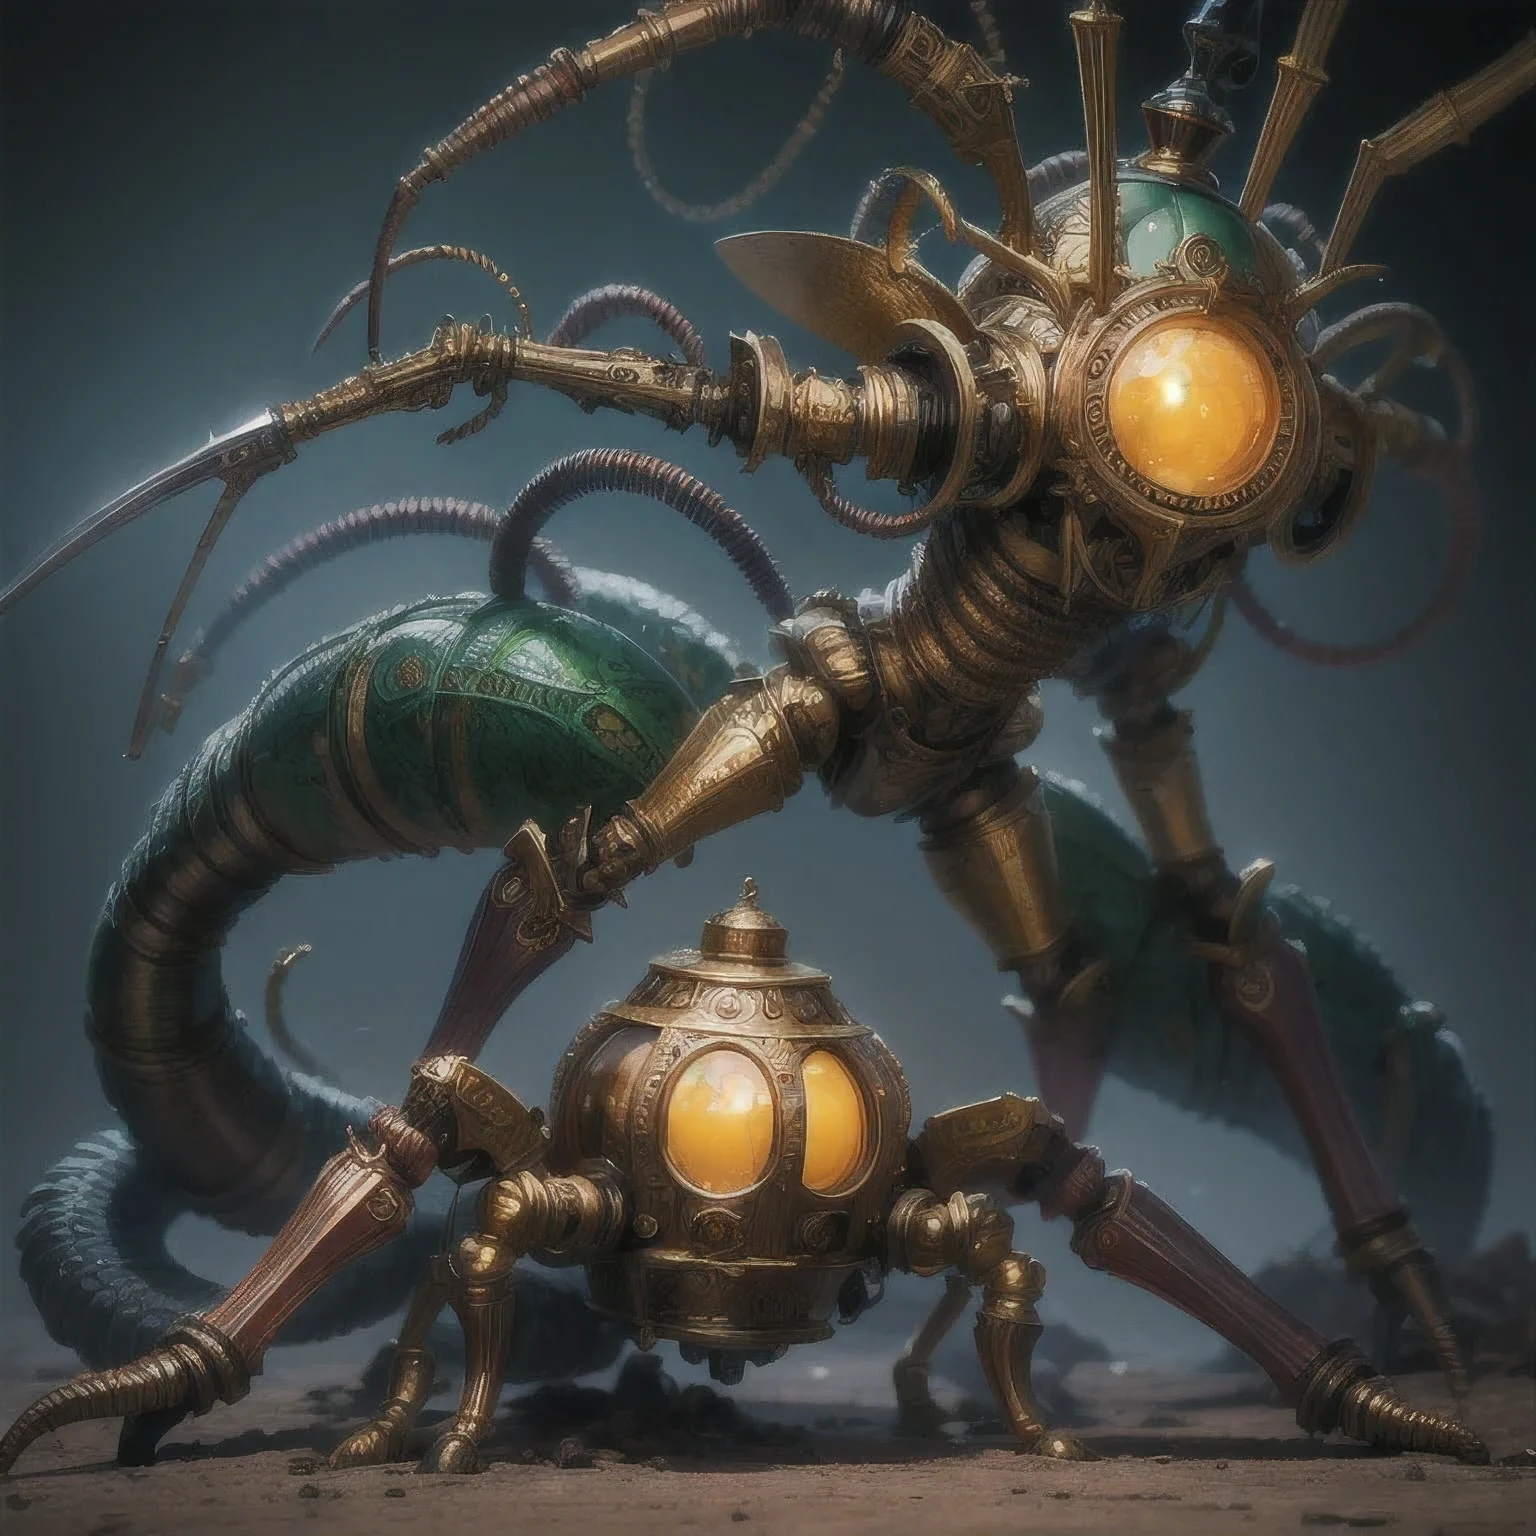 a close up of a golden паук with a royal green emerald body and legs, steampunk паук, Mechanical паук red and cobalt blue legs, паукообразный, Лолс, арахна, паук, Стимпанк-робот Скорпион, очень детализированный барлоу 8k, Ярко-оранжево-синие ножки большие, скульптура из золота, Хироюки Тадзима, full samurai armor паукman, giger паук joker, инсектоид，（（（Дегенератор ）））（（（Дегенератор ）））